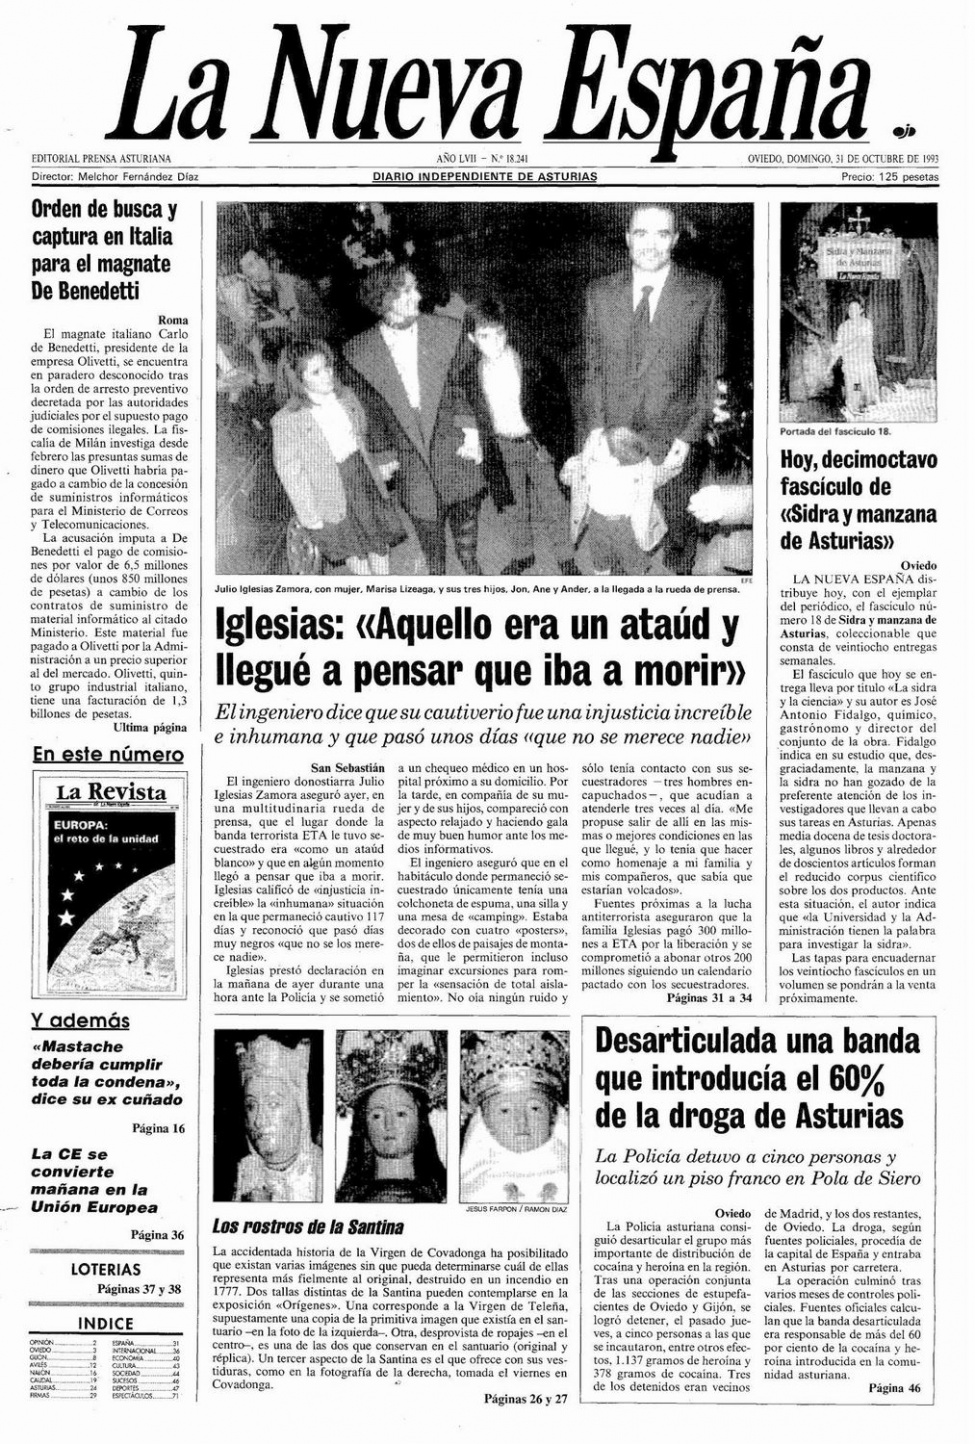 Portada del Domingo, 31 de Octubre de 1993